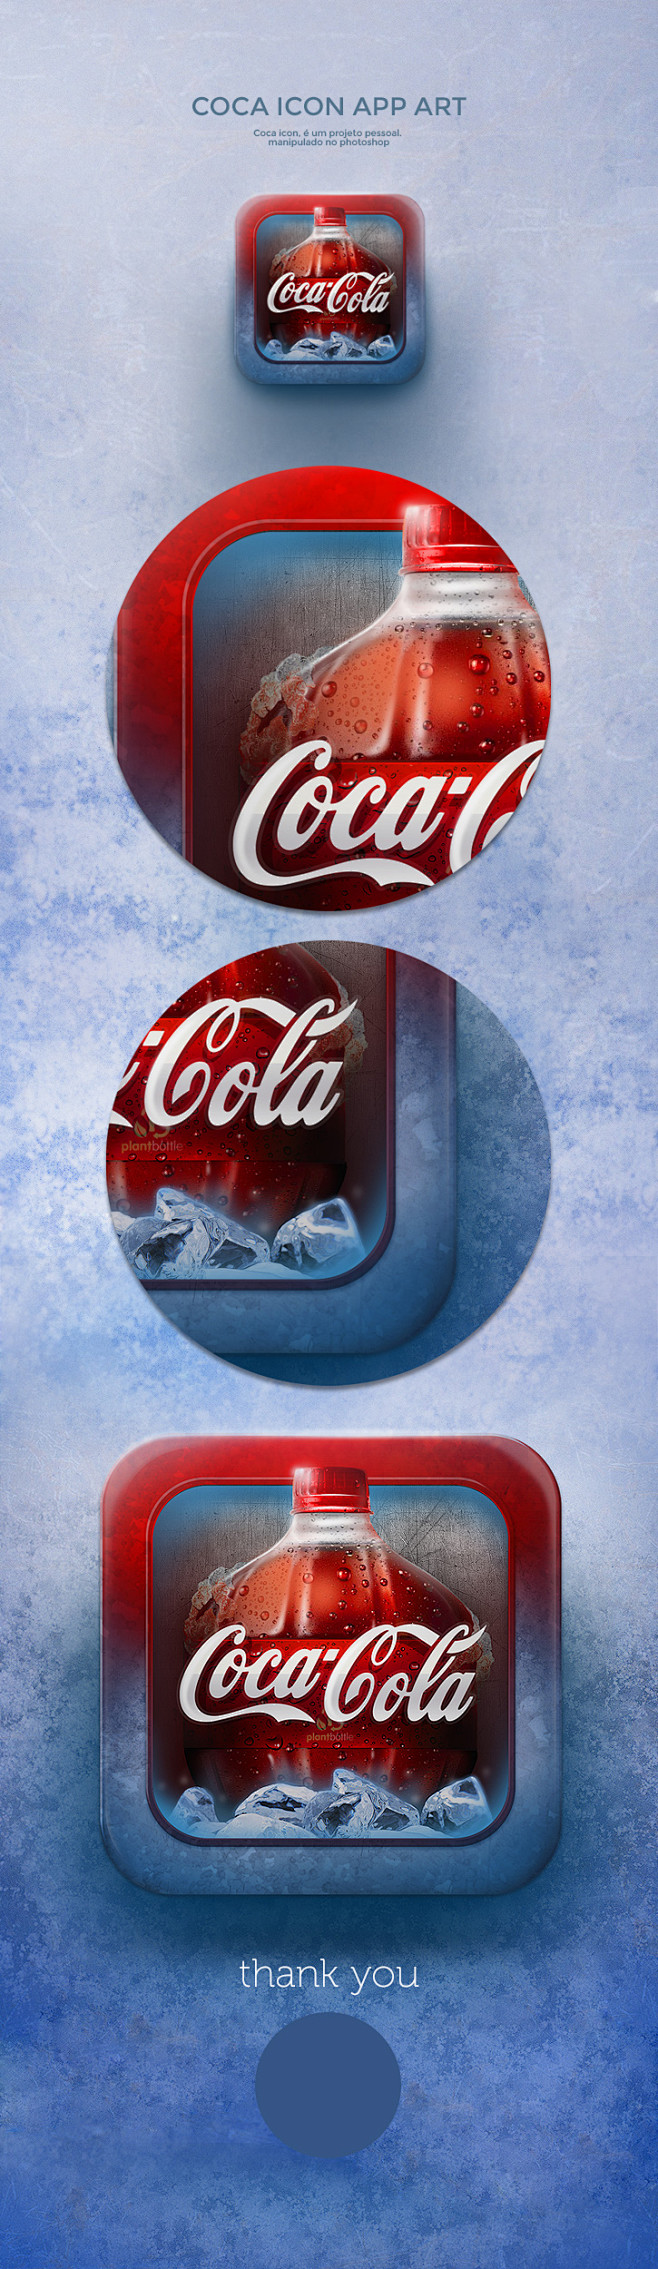 Coca Icon app art : ...